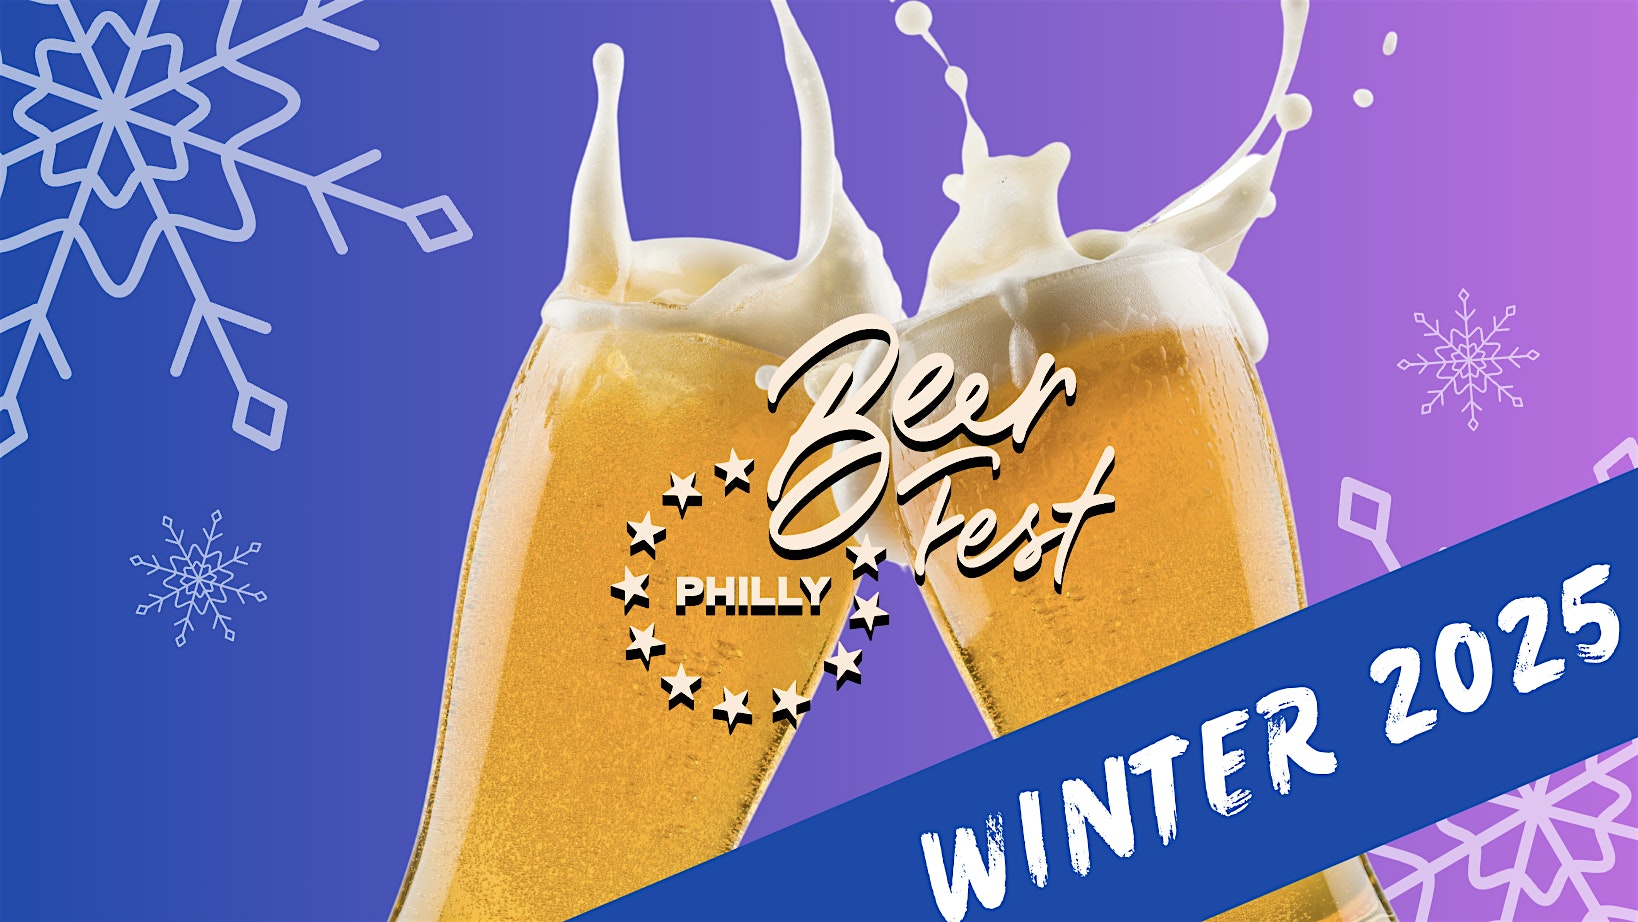 Philly Beer Fest: Winter